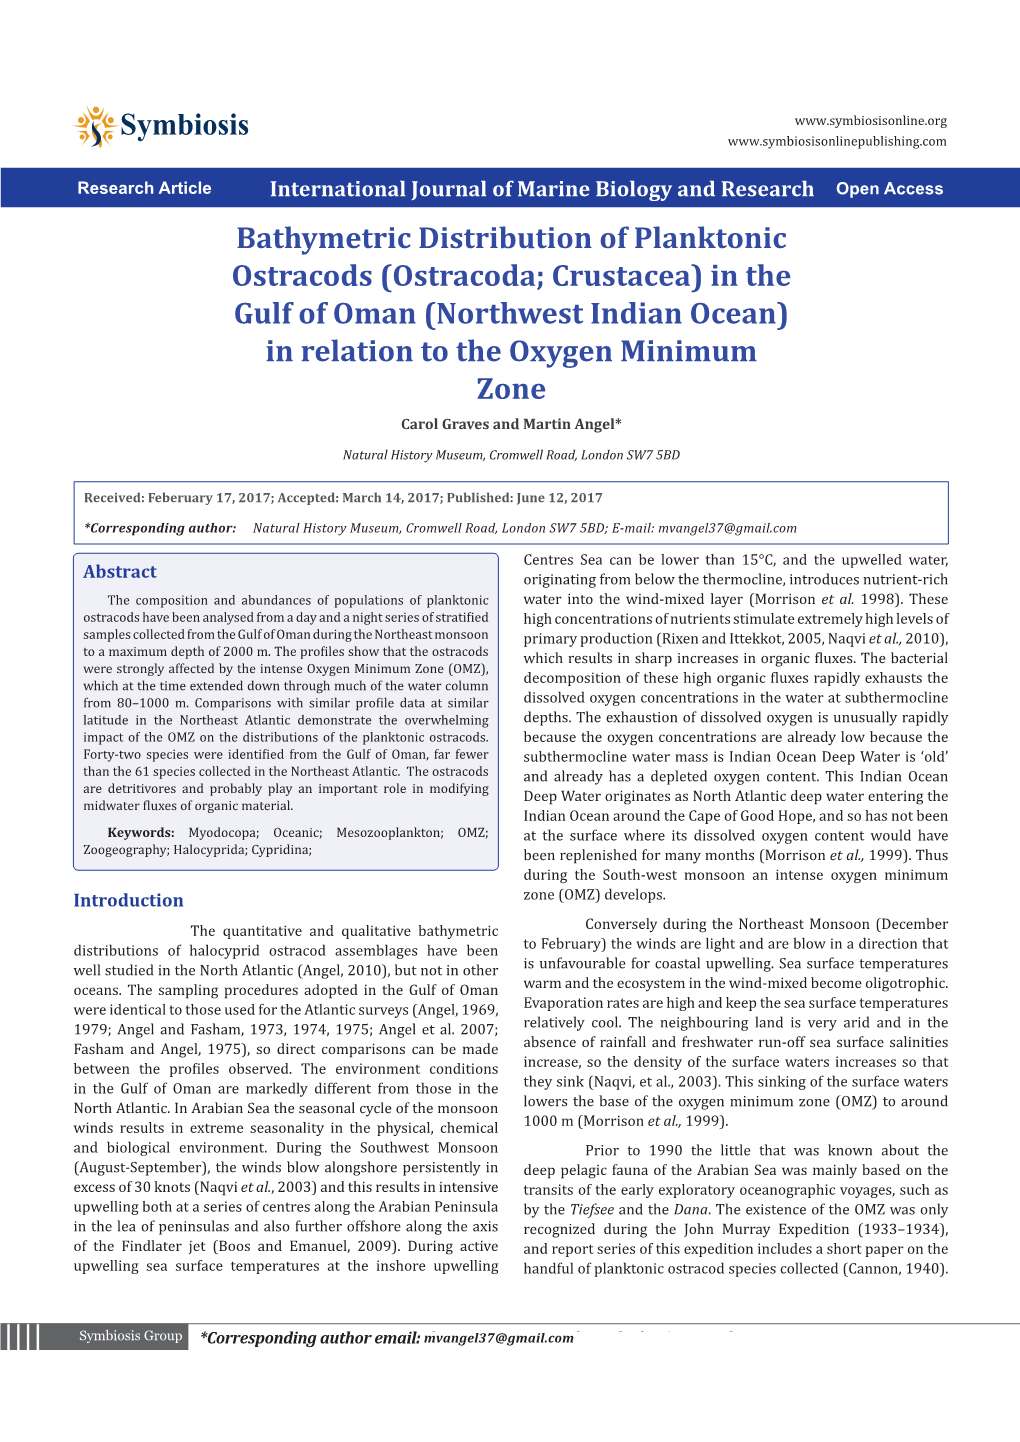 Bathymetric Distribution of Planktonic Ostracods